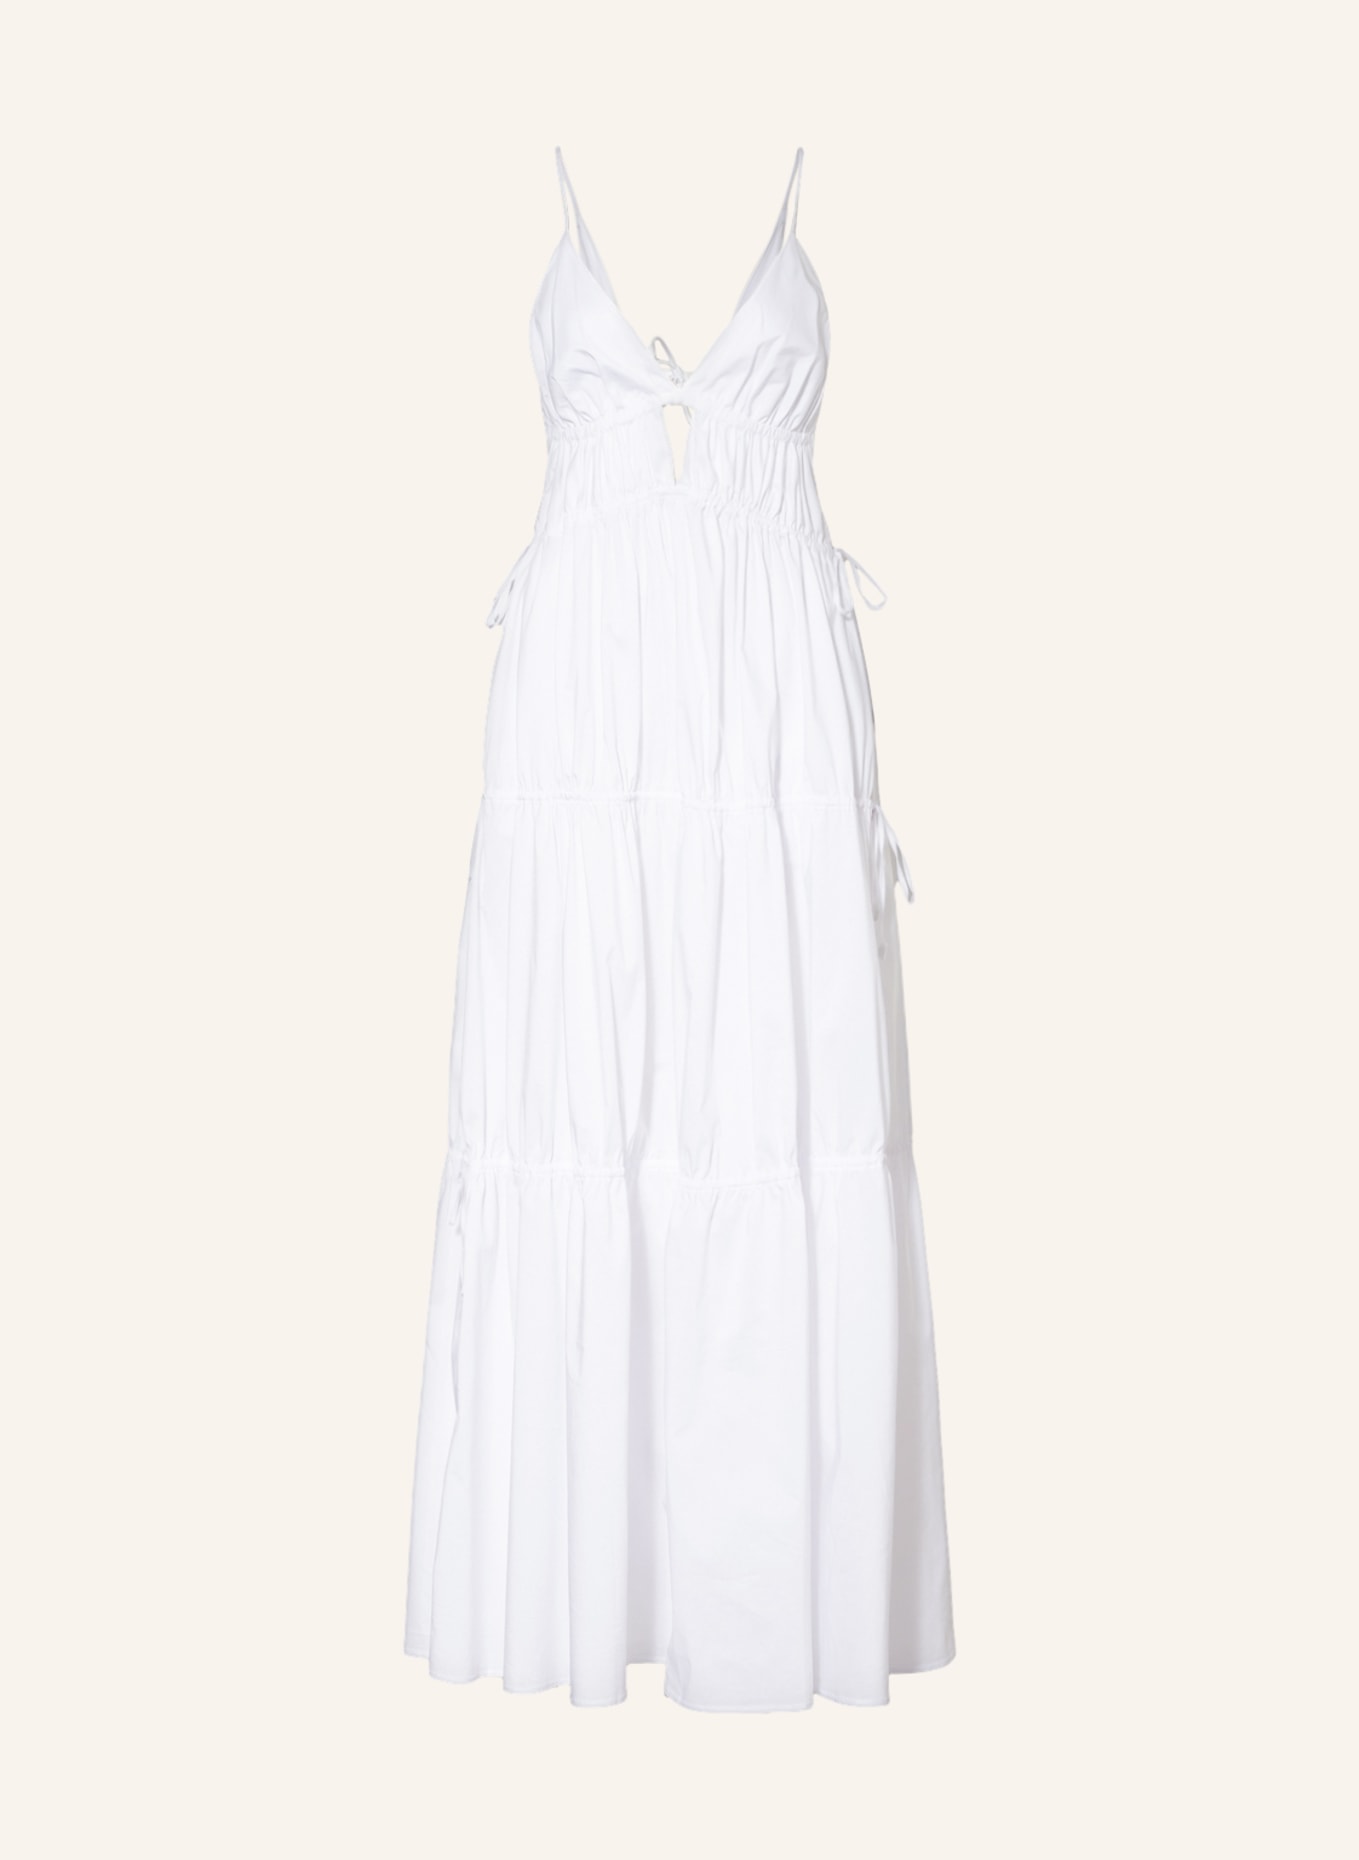 SIMKHAI Kleid APRIL mit Cut-out, Farbe: WEISS (Bild 1)